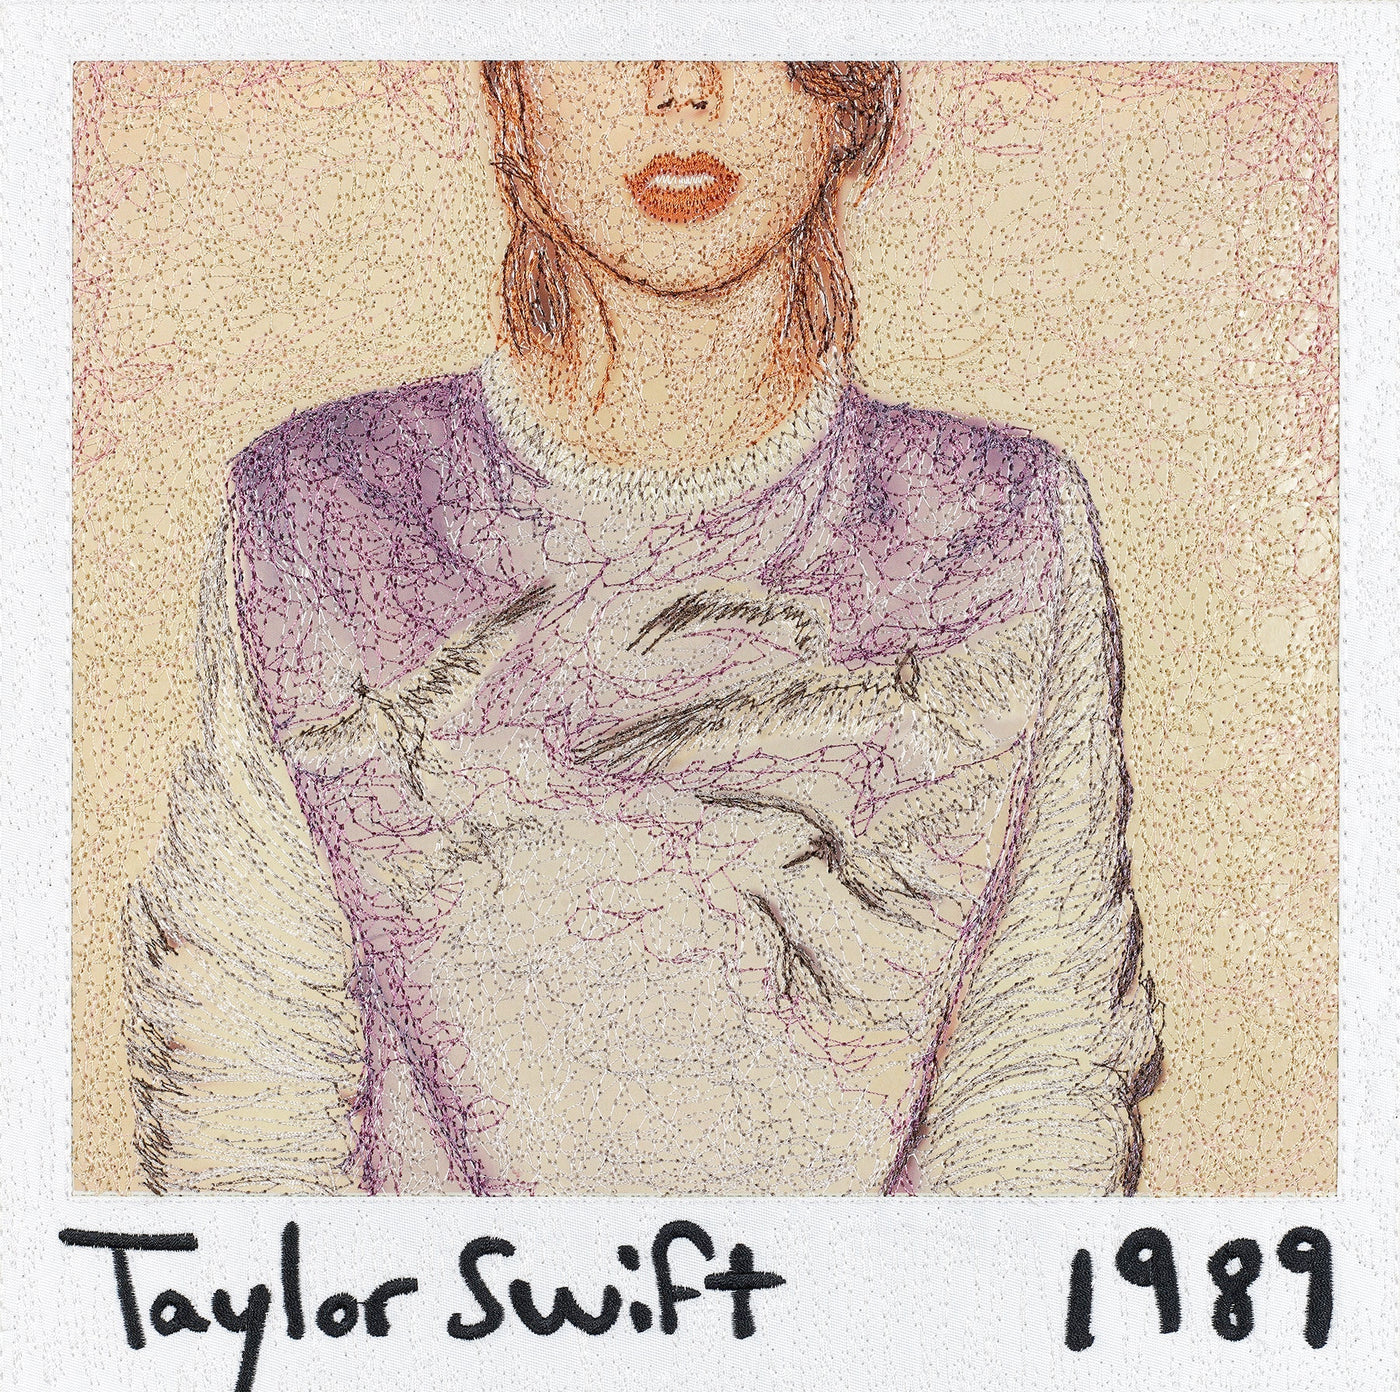 Taylor Swift, 1989